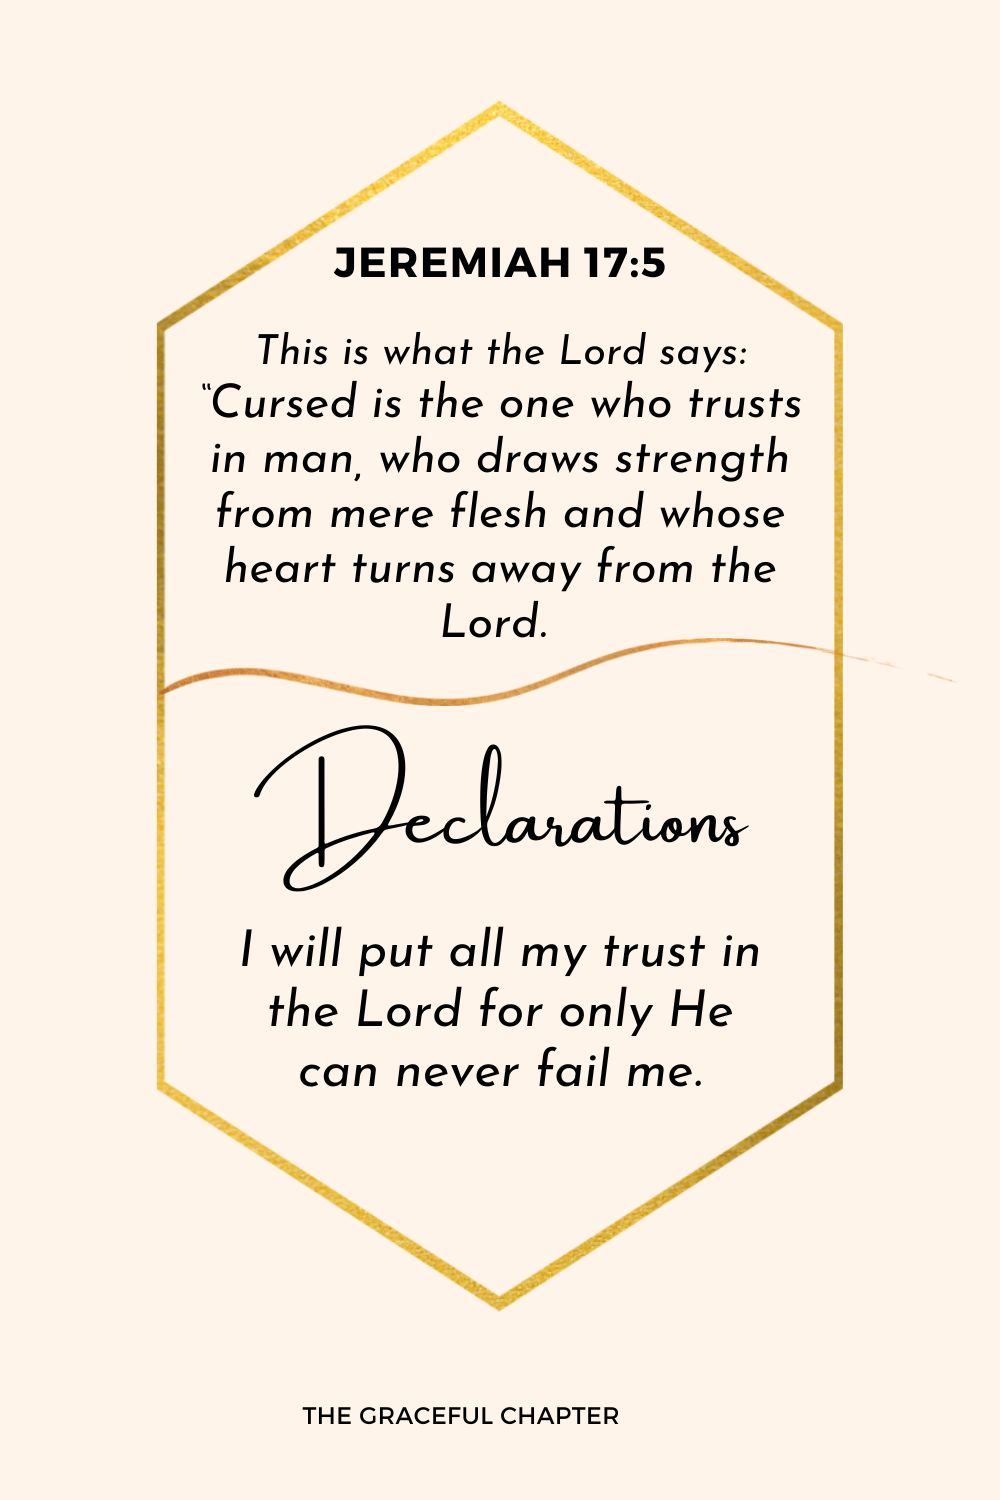 Declaration - Jeremiah 17:5